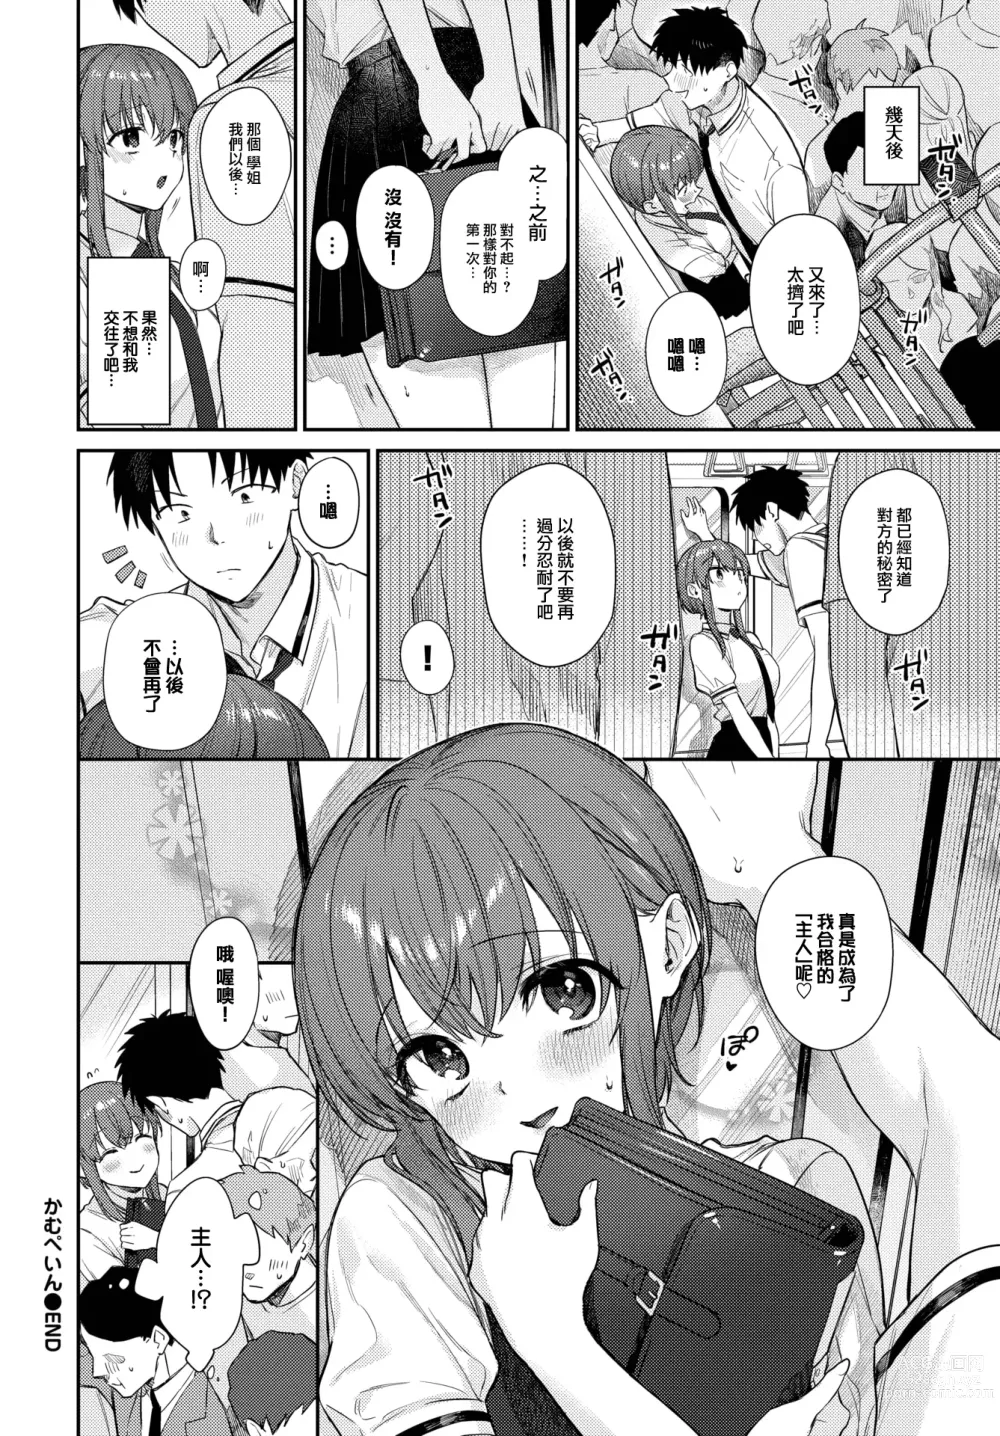 Page 25 of manga Come Pain!